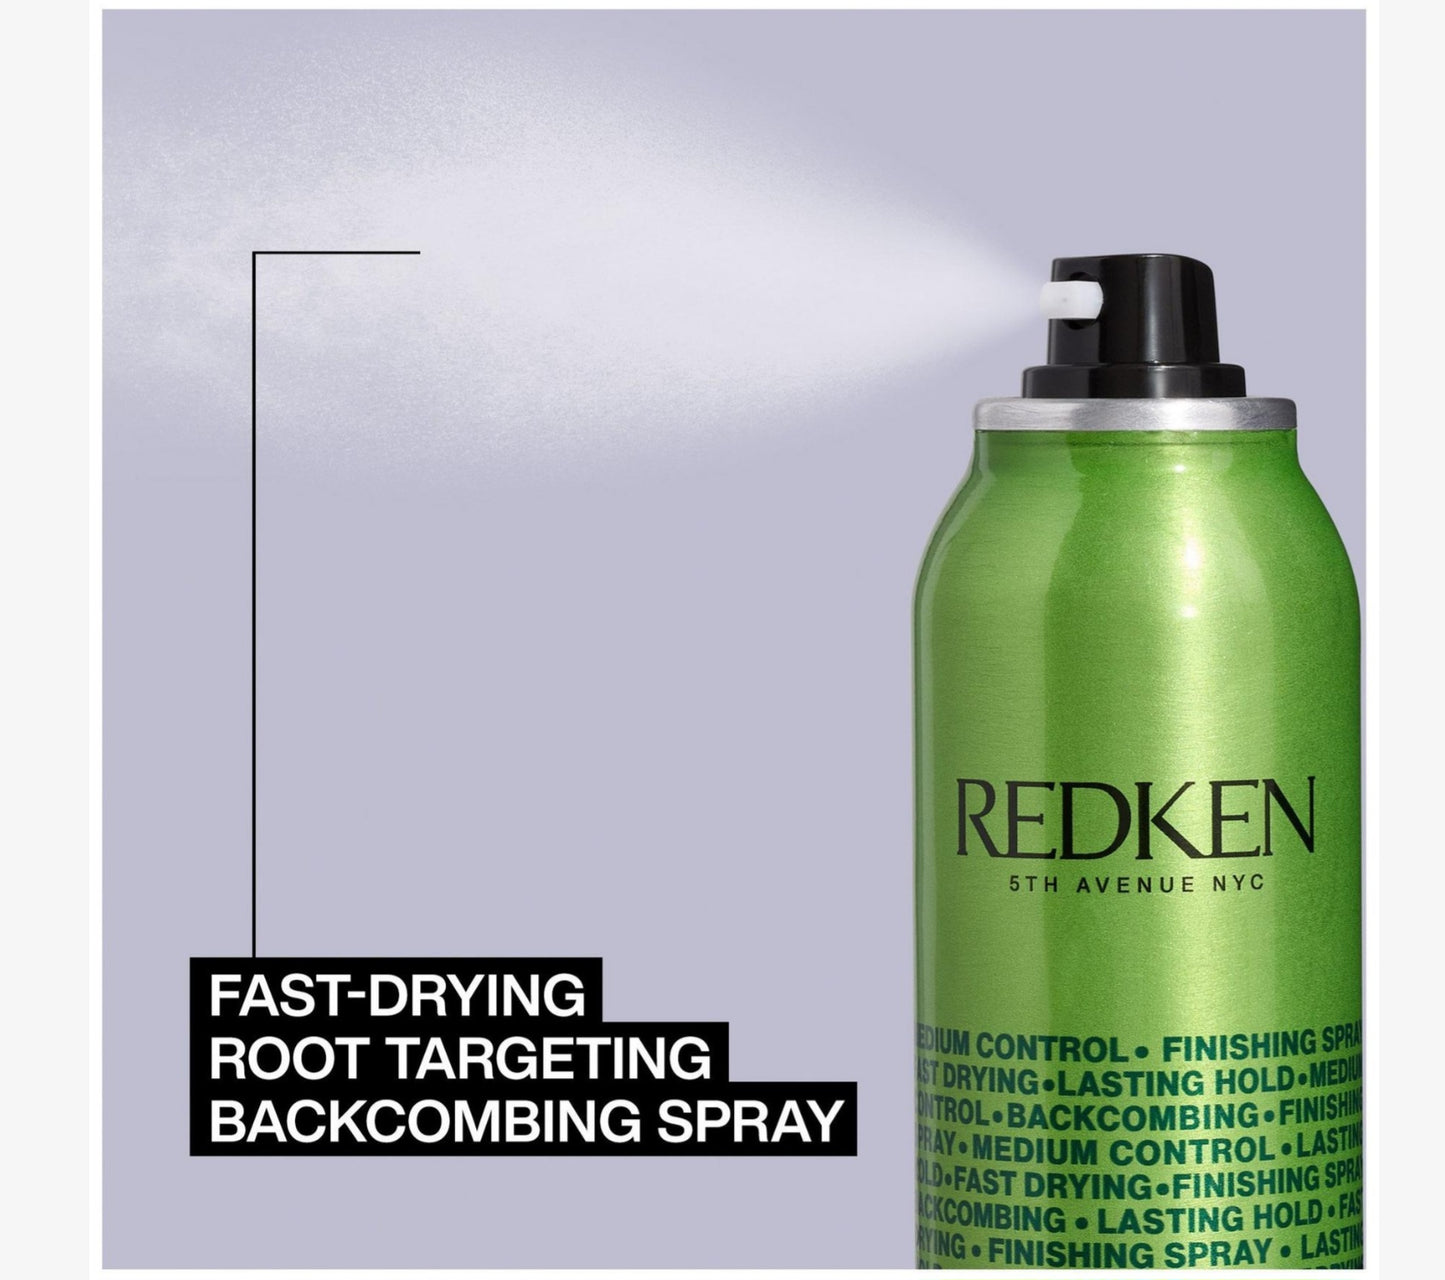 Redken Root Tease Backcombing Finishing Spray